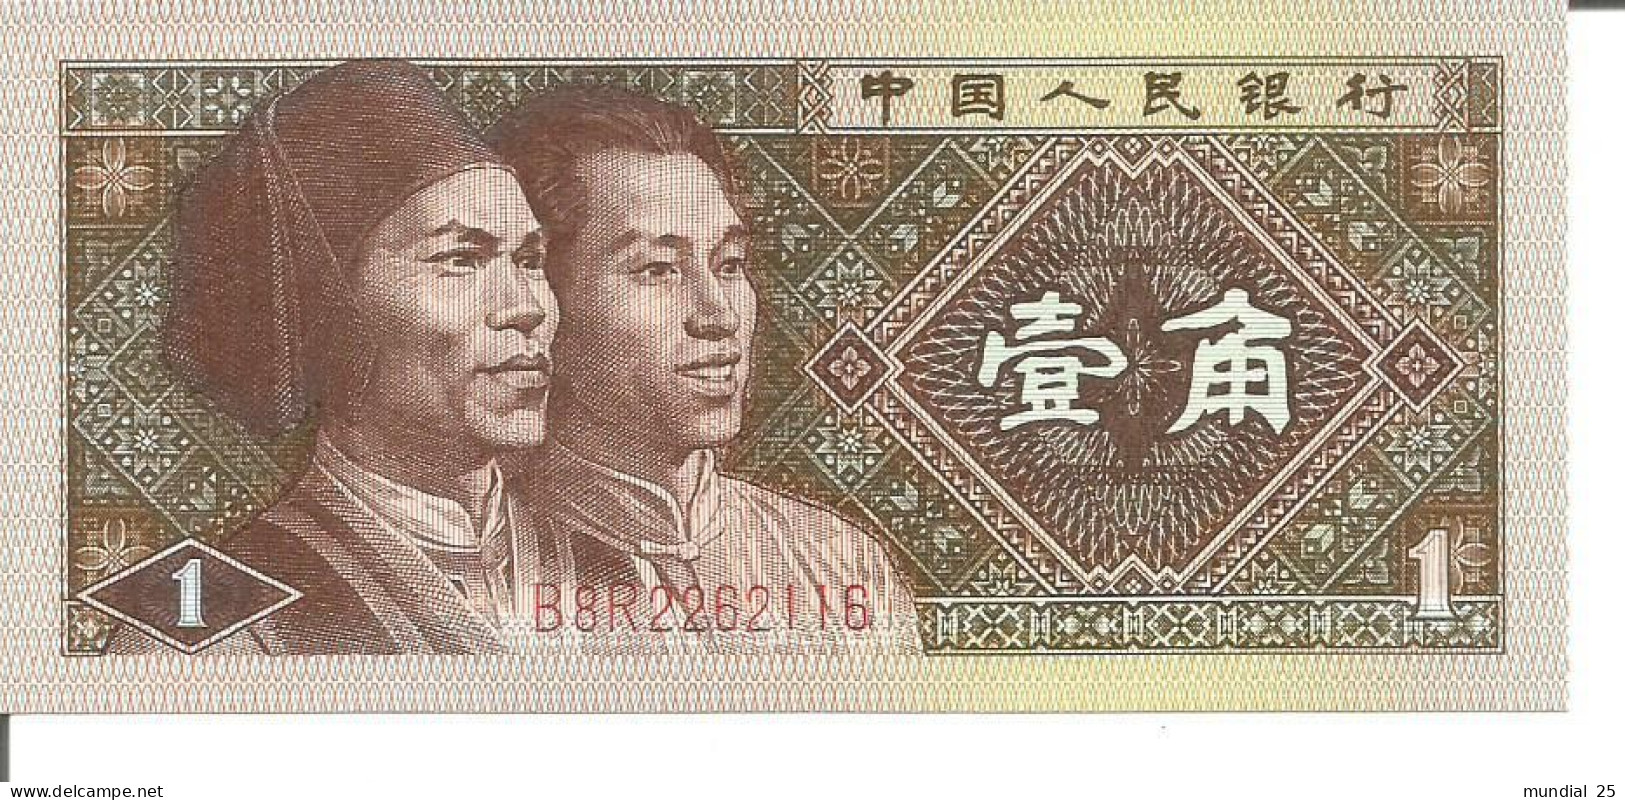 CHINA 1 JIAO 1980 - Cina